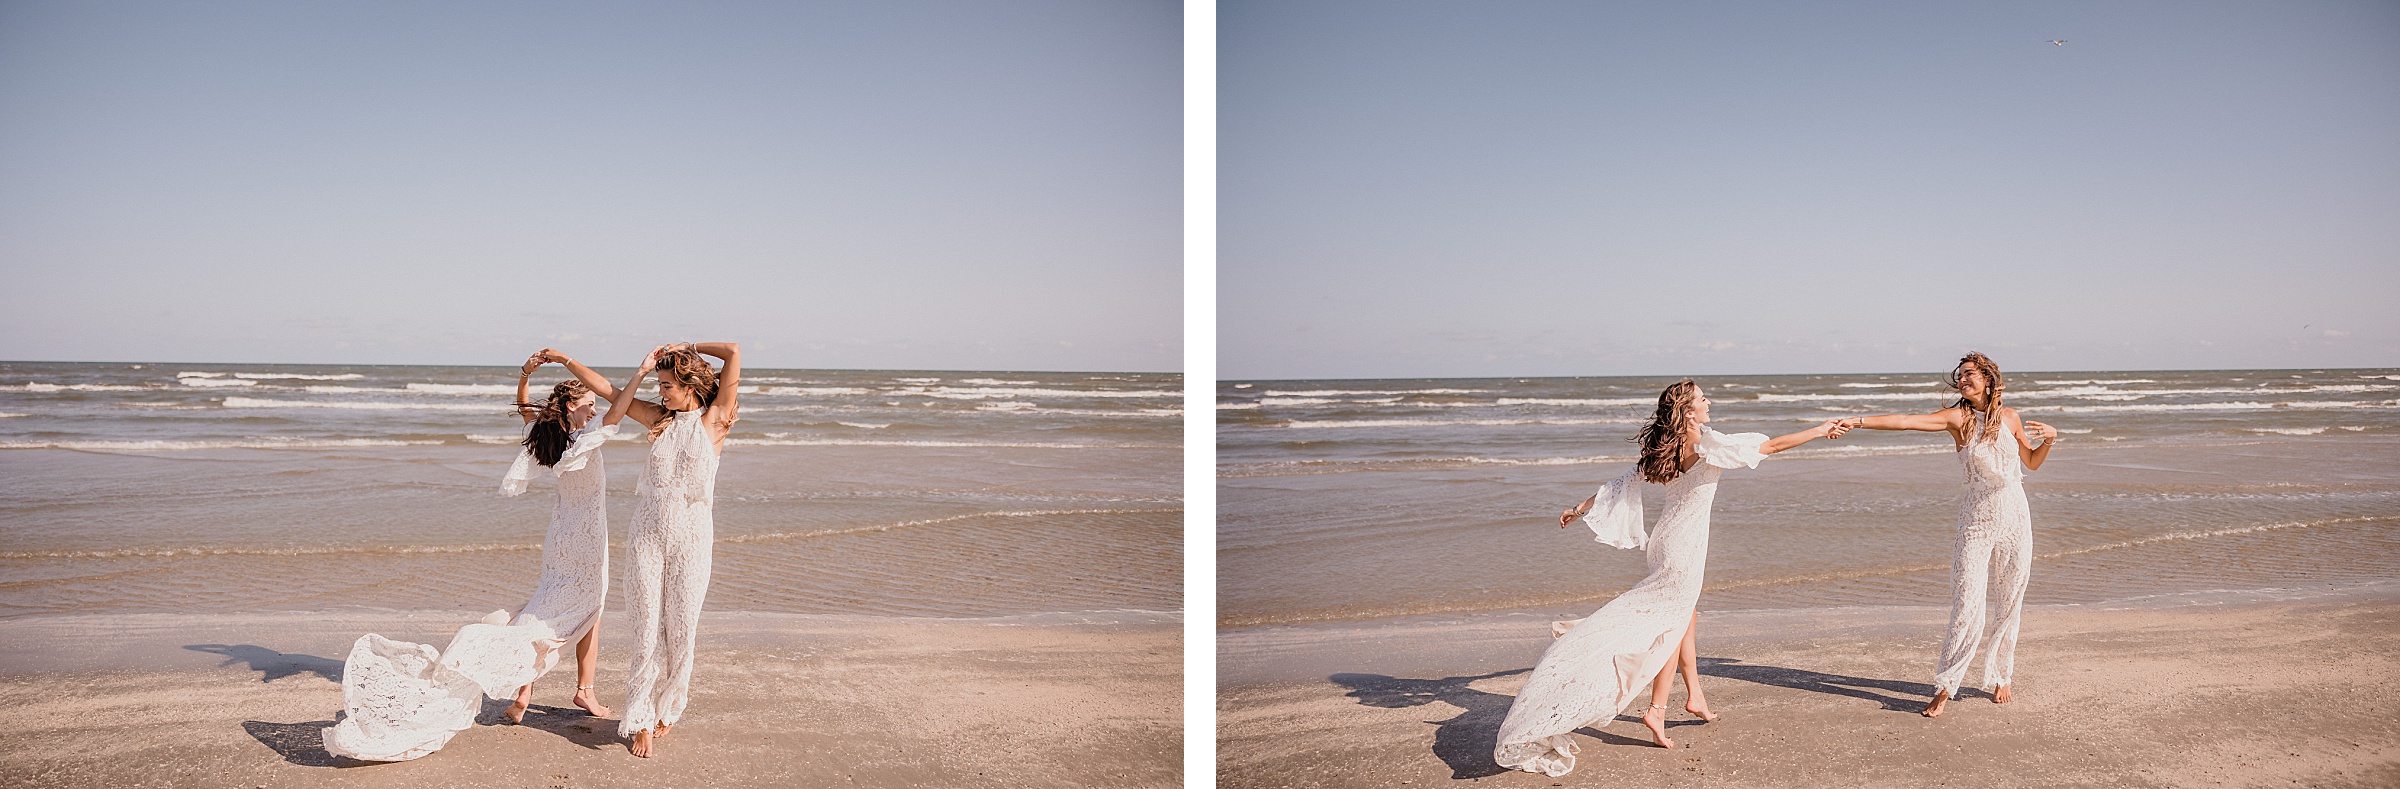 Bridal Portraits during an elopement at Galveston Beach in Texas.